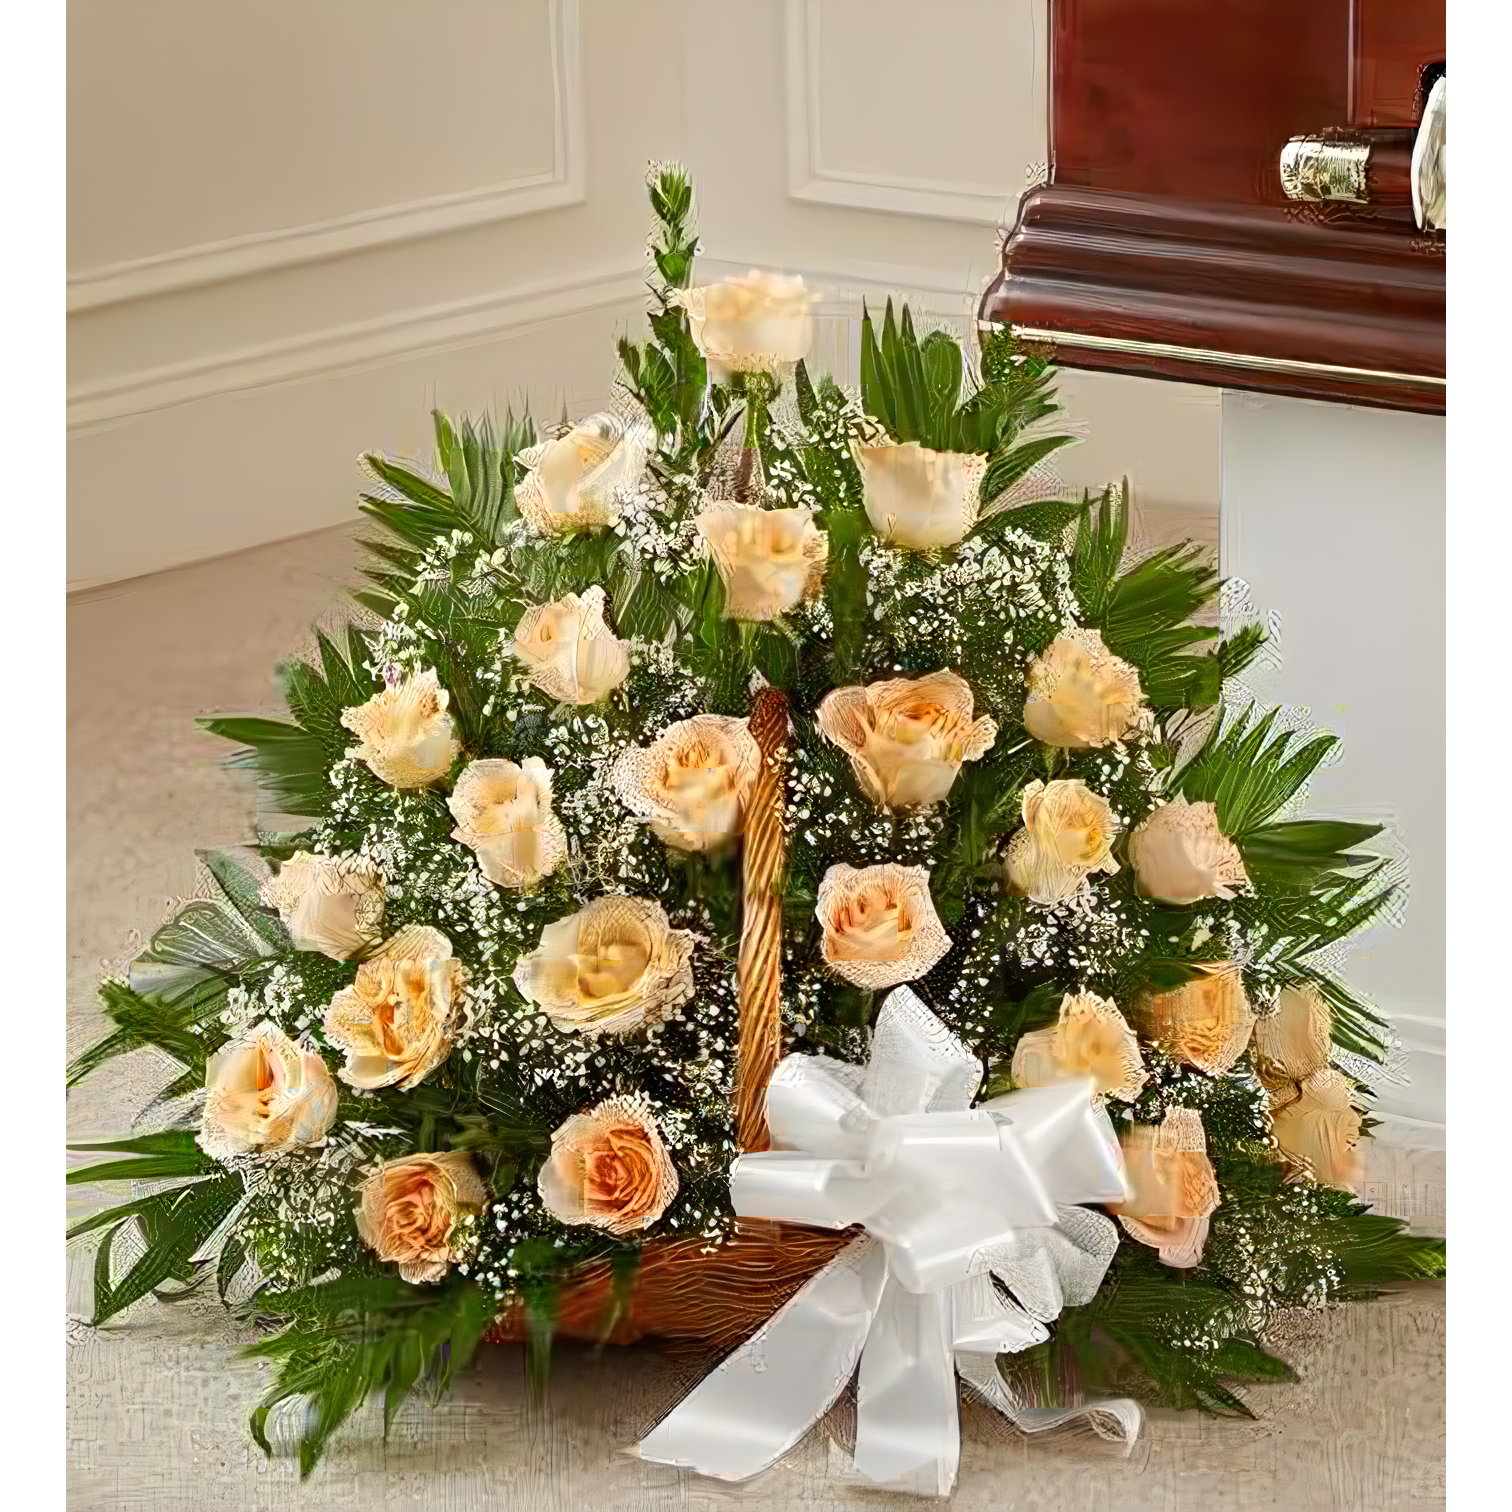 Manhattan Flower Delivery - Sincerest Sympathy Fireside Basket - Funeral > For the Service